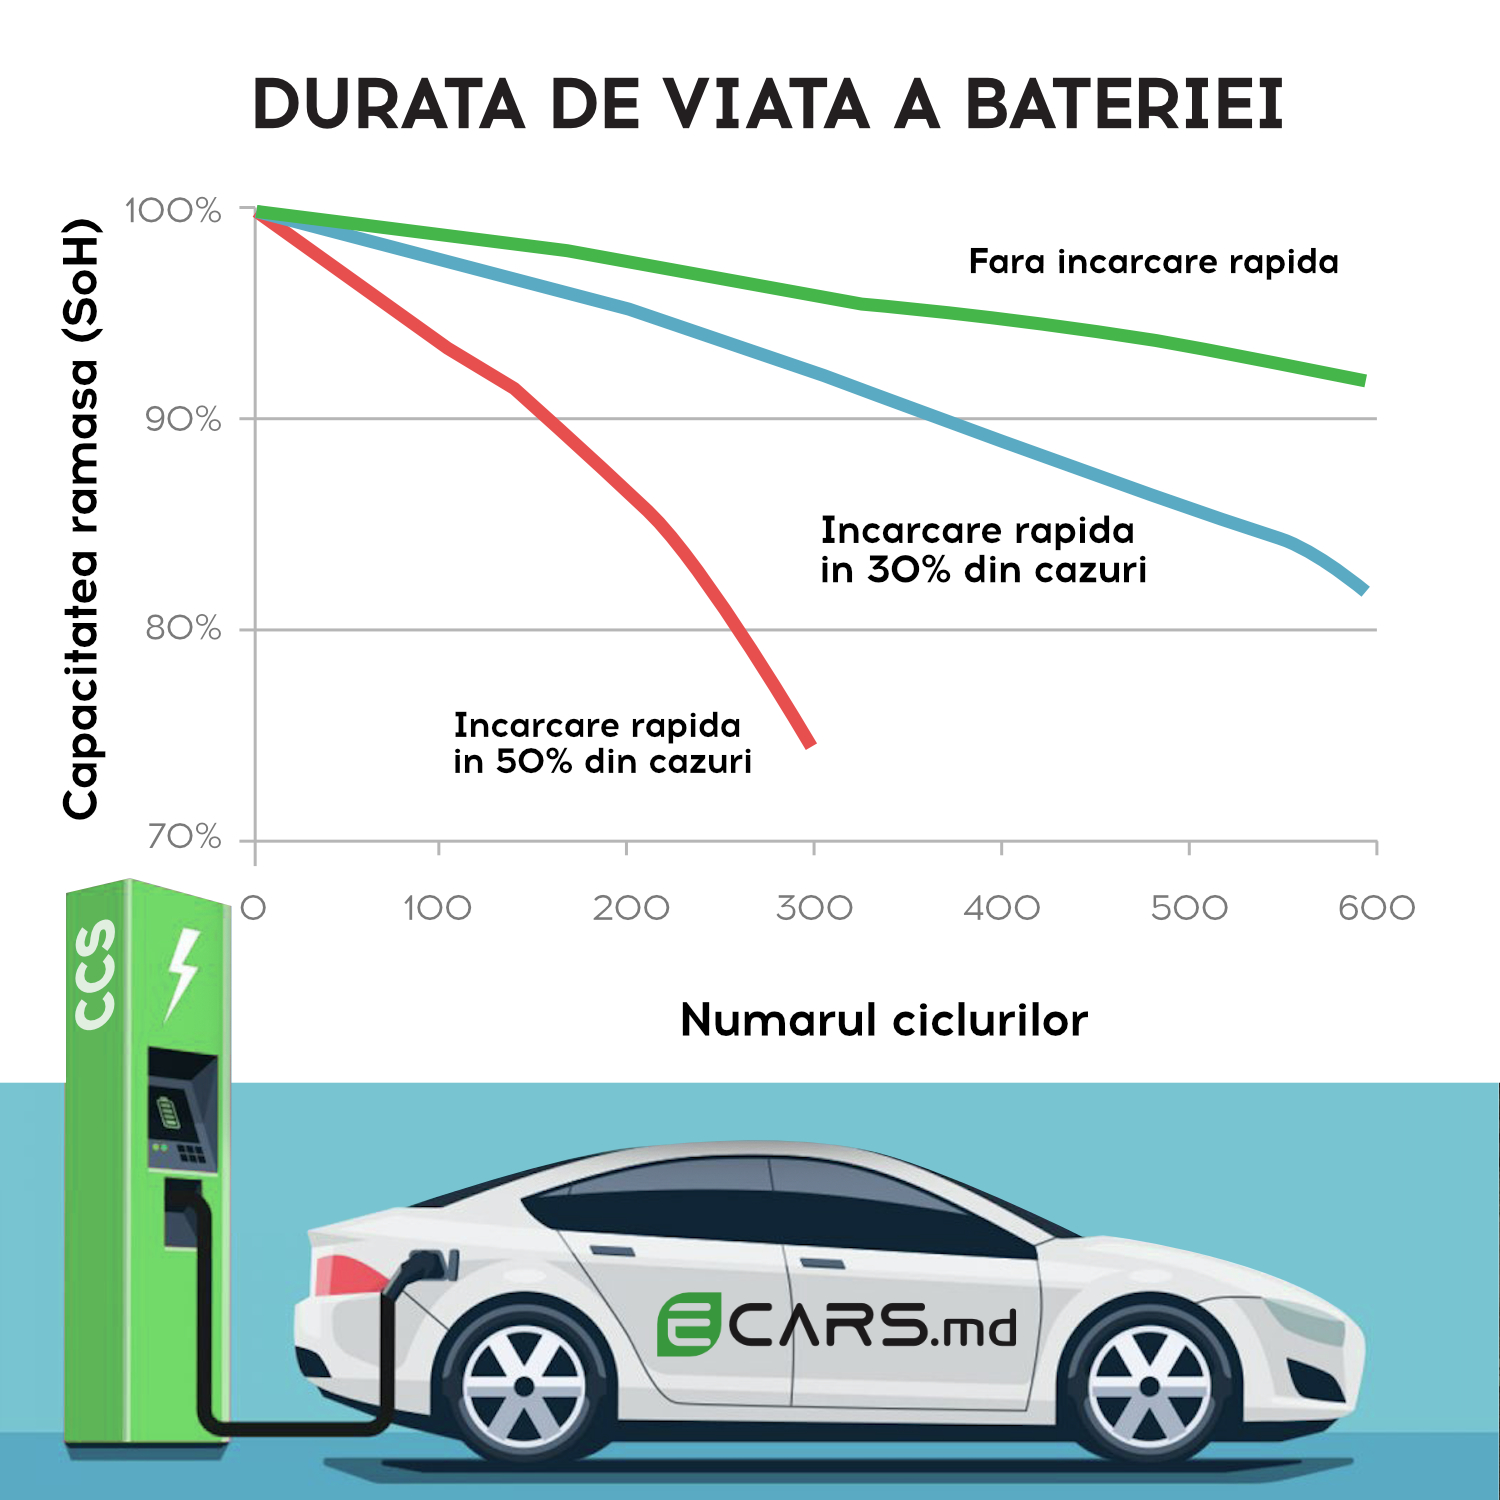 График срока батареи у электрокаров. Средний период жизни батареи на электромобиле. Срок службы электромобиля